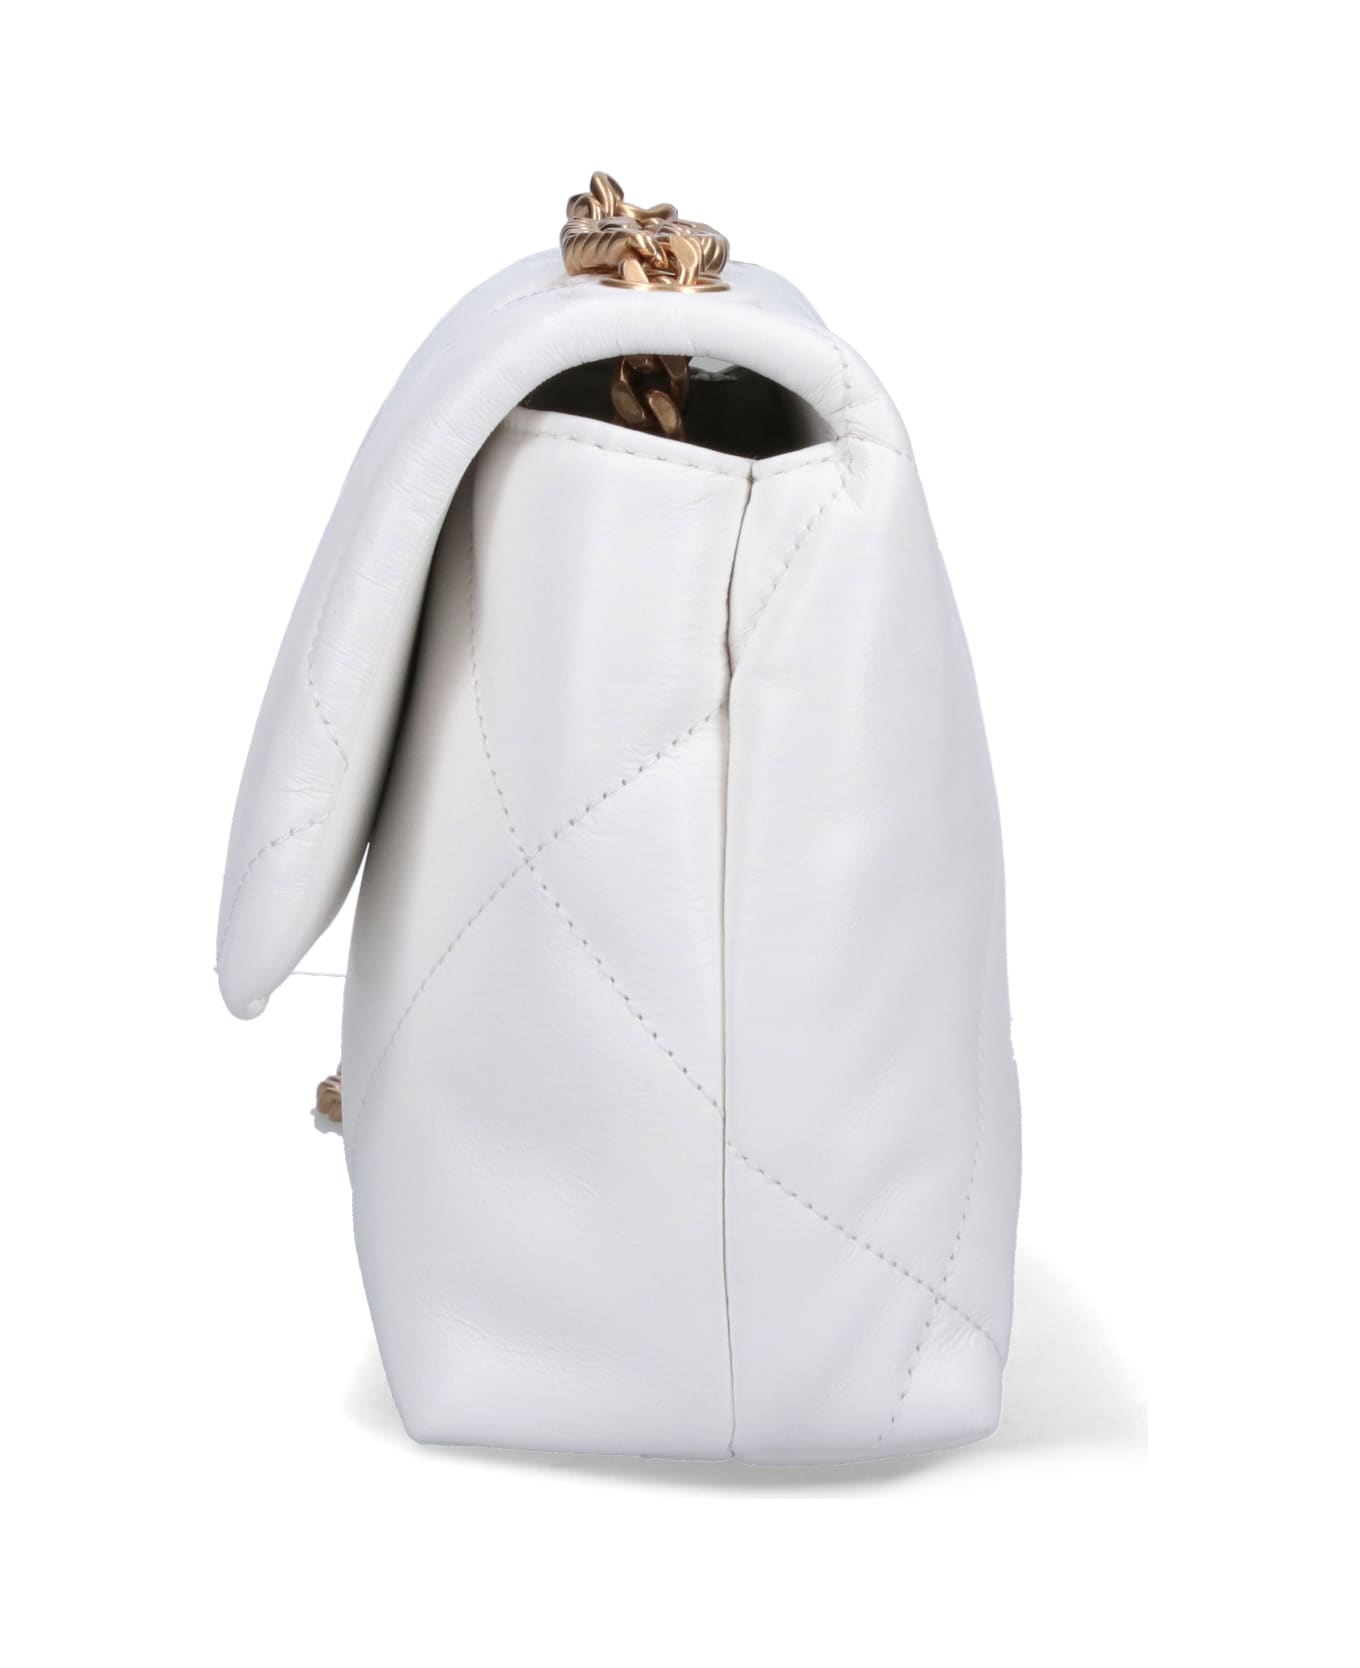 Tory Burch 'convertibile Kira' Small Shoulder Bag - White